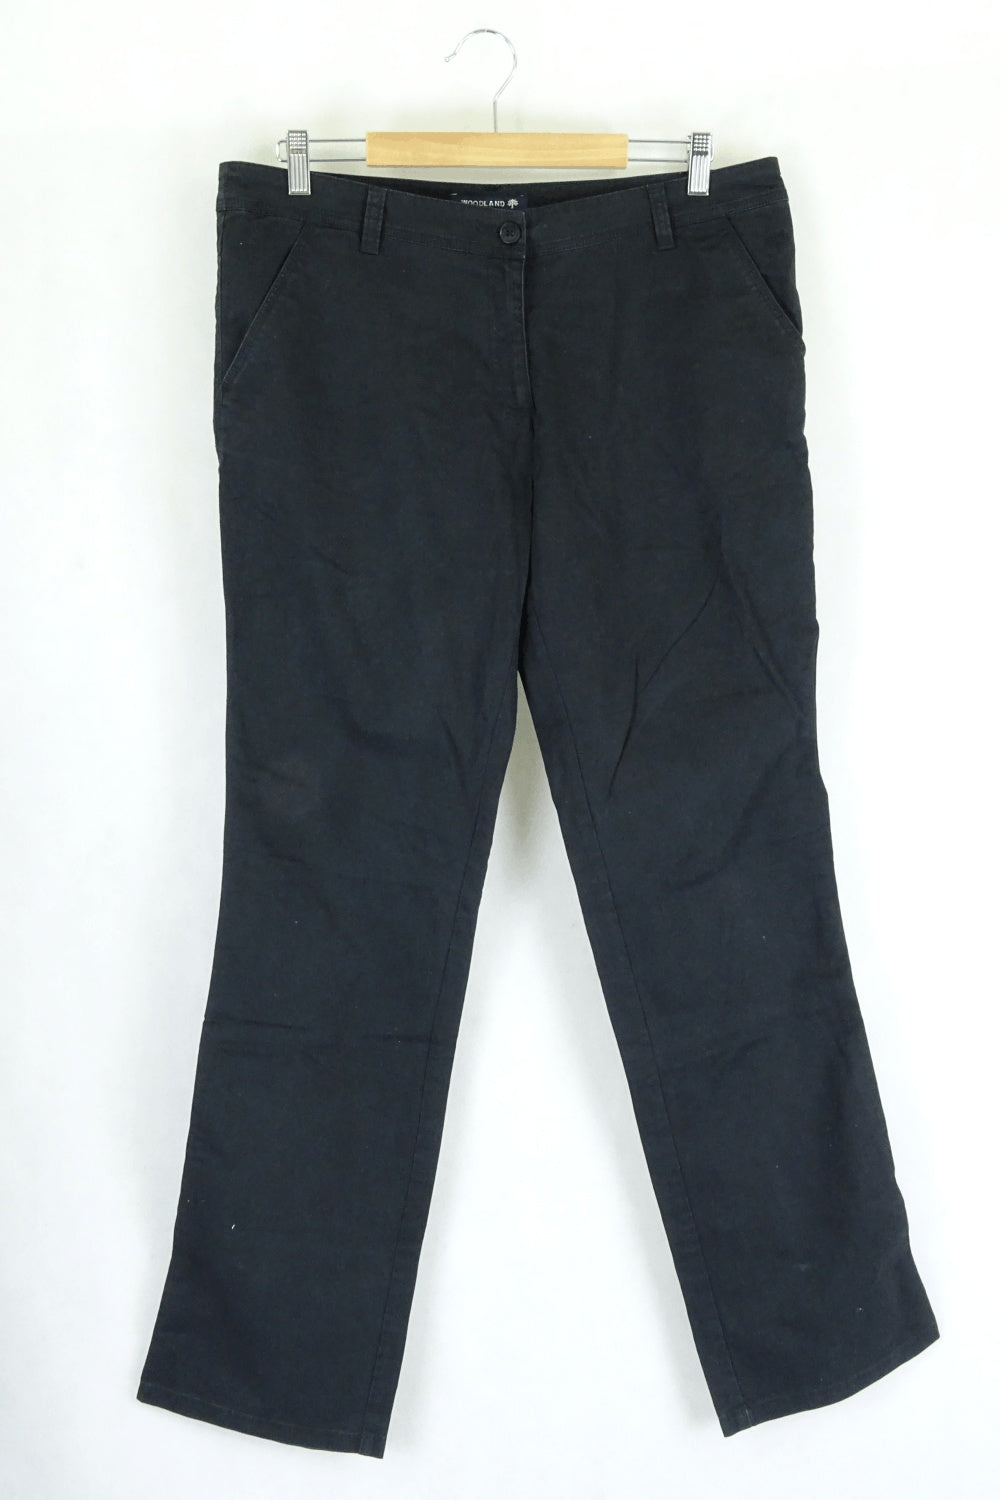 Woodland Black Pants 34